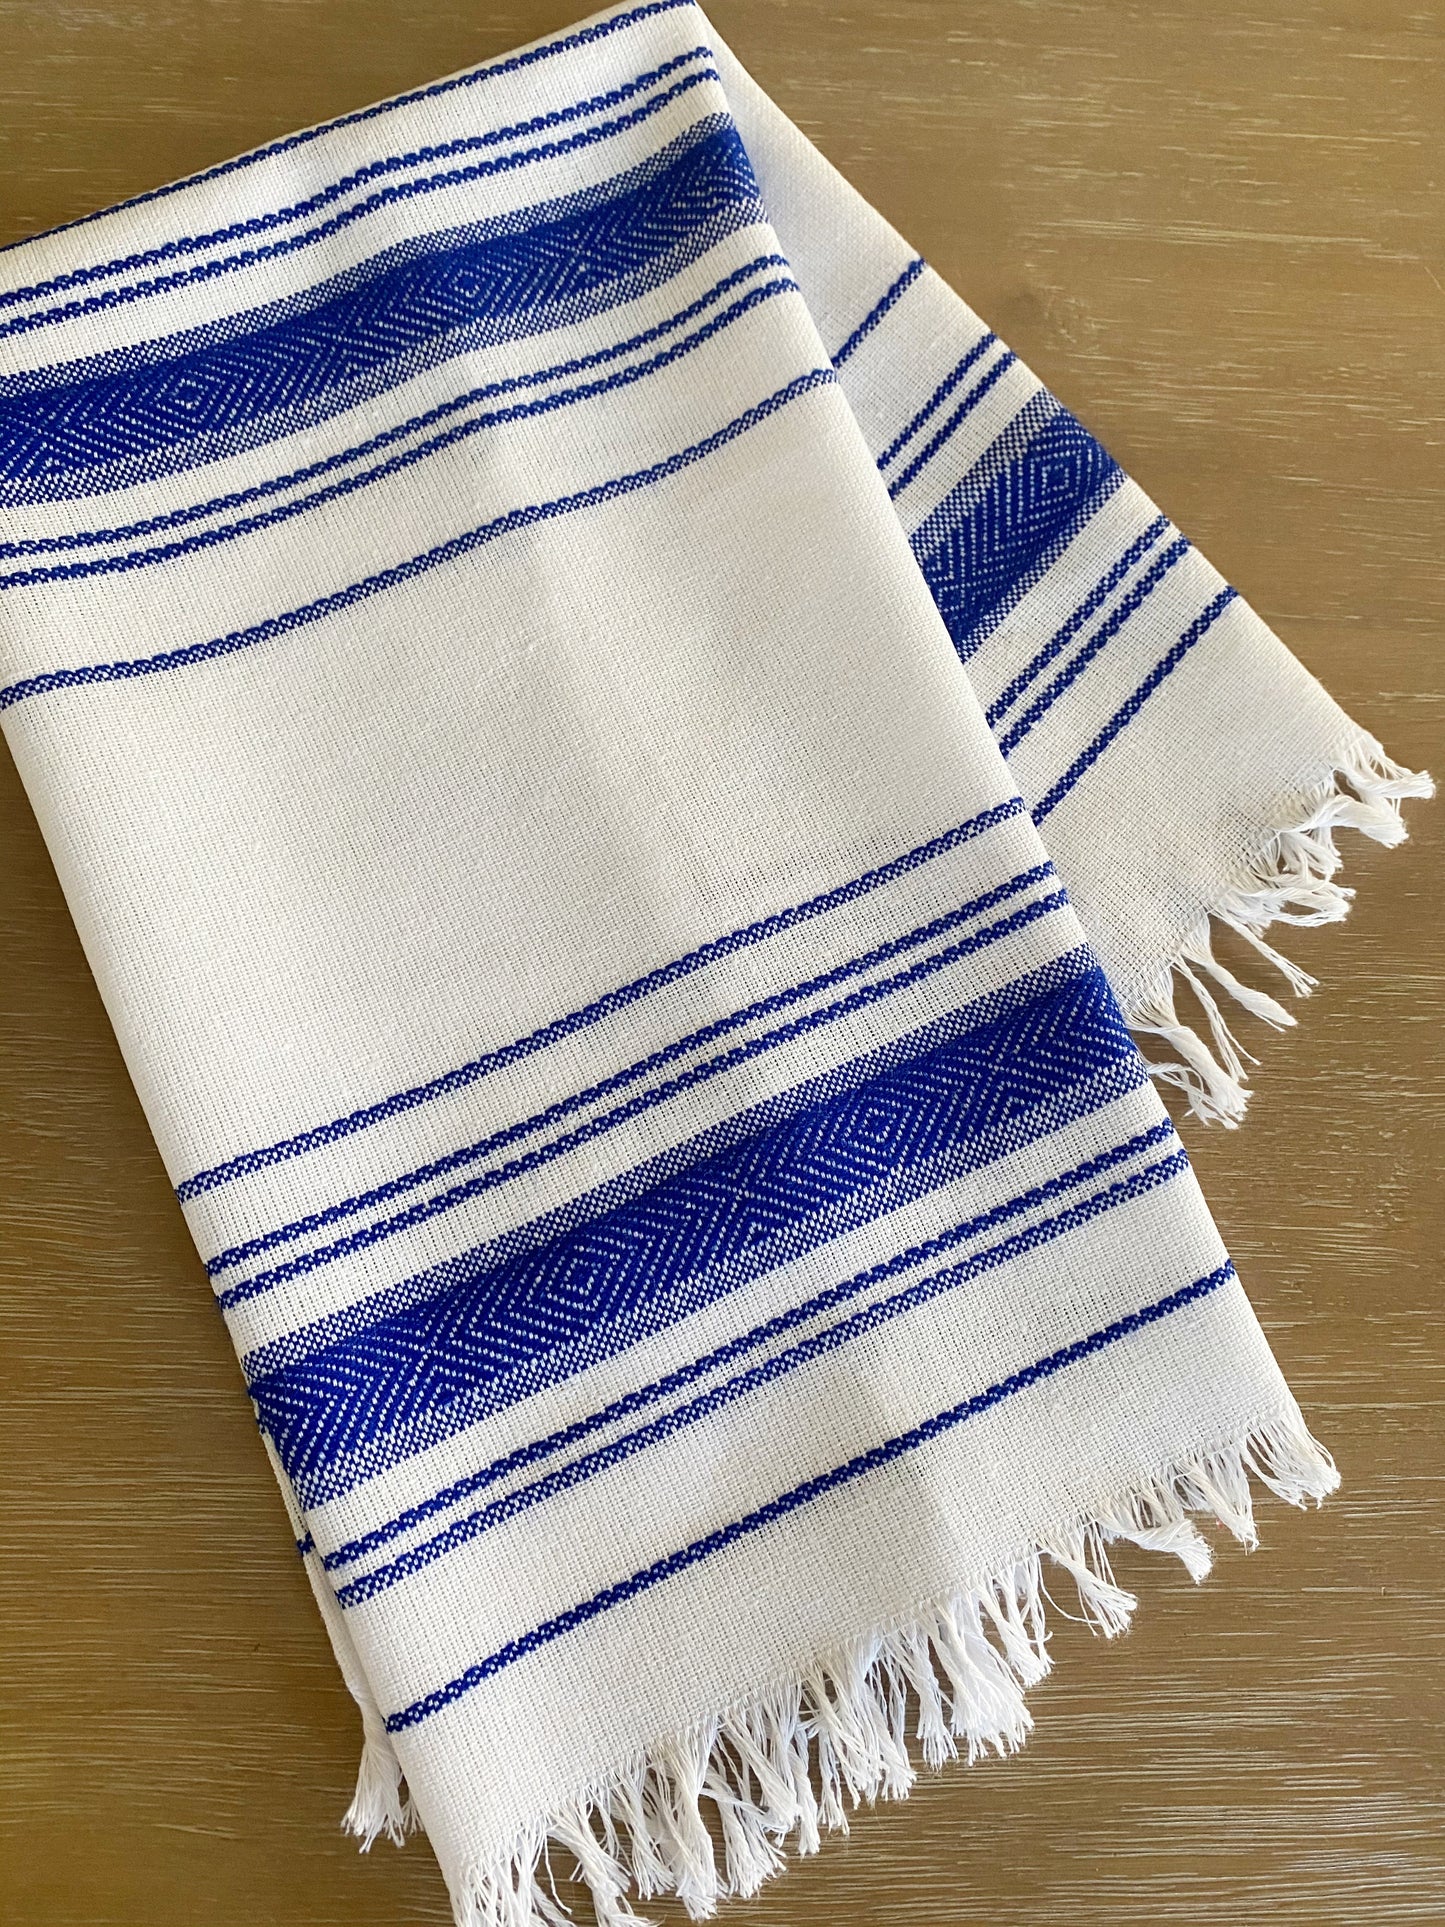 Dish towel - Navy blue